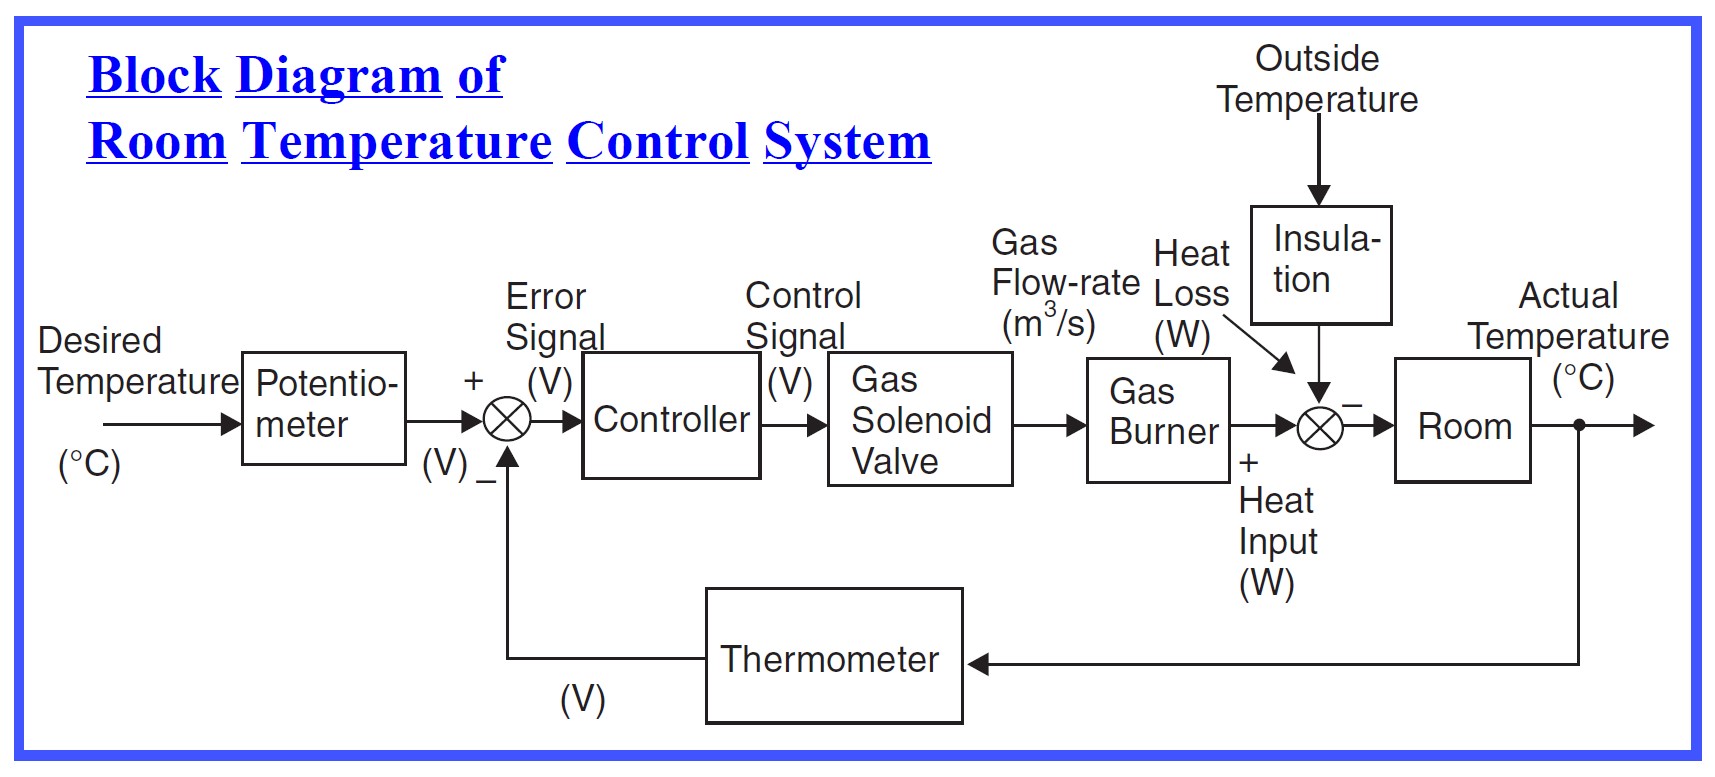 Block Diagram of Control System